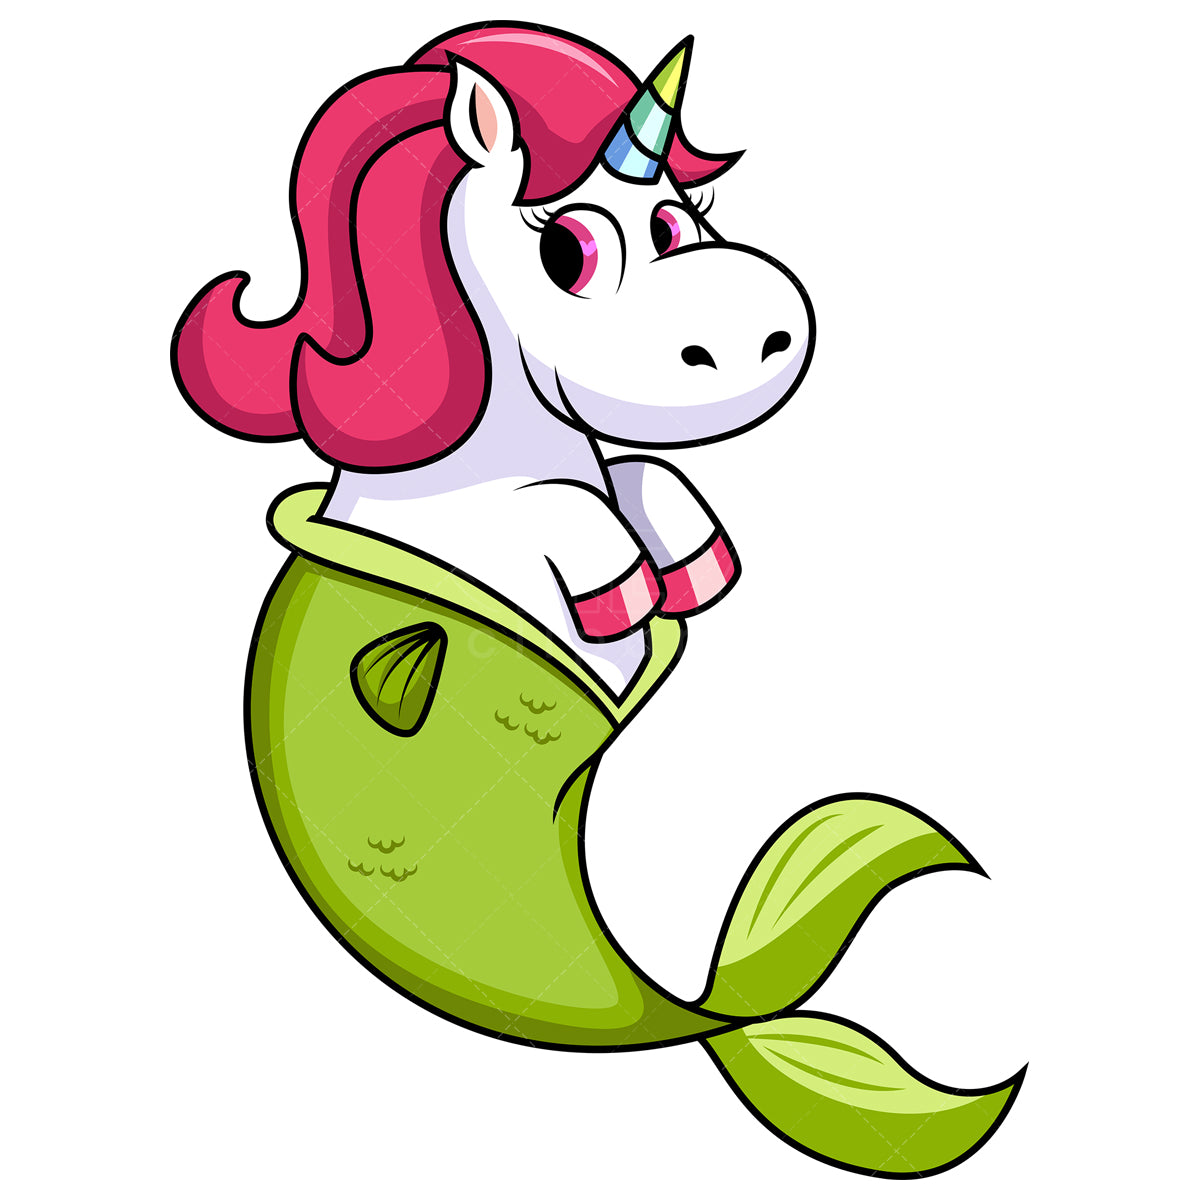 Royalty-free stock vector illustration of a half unicorn half mermaid.